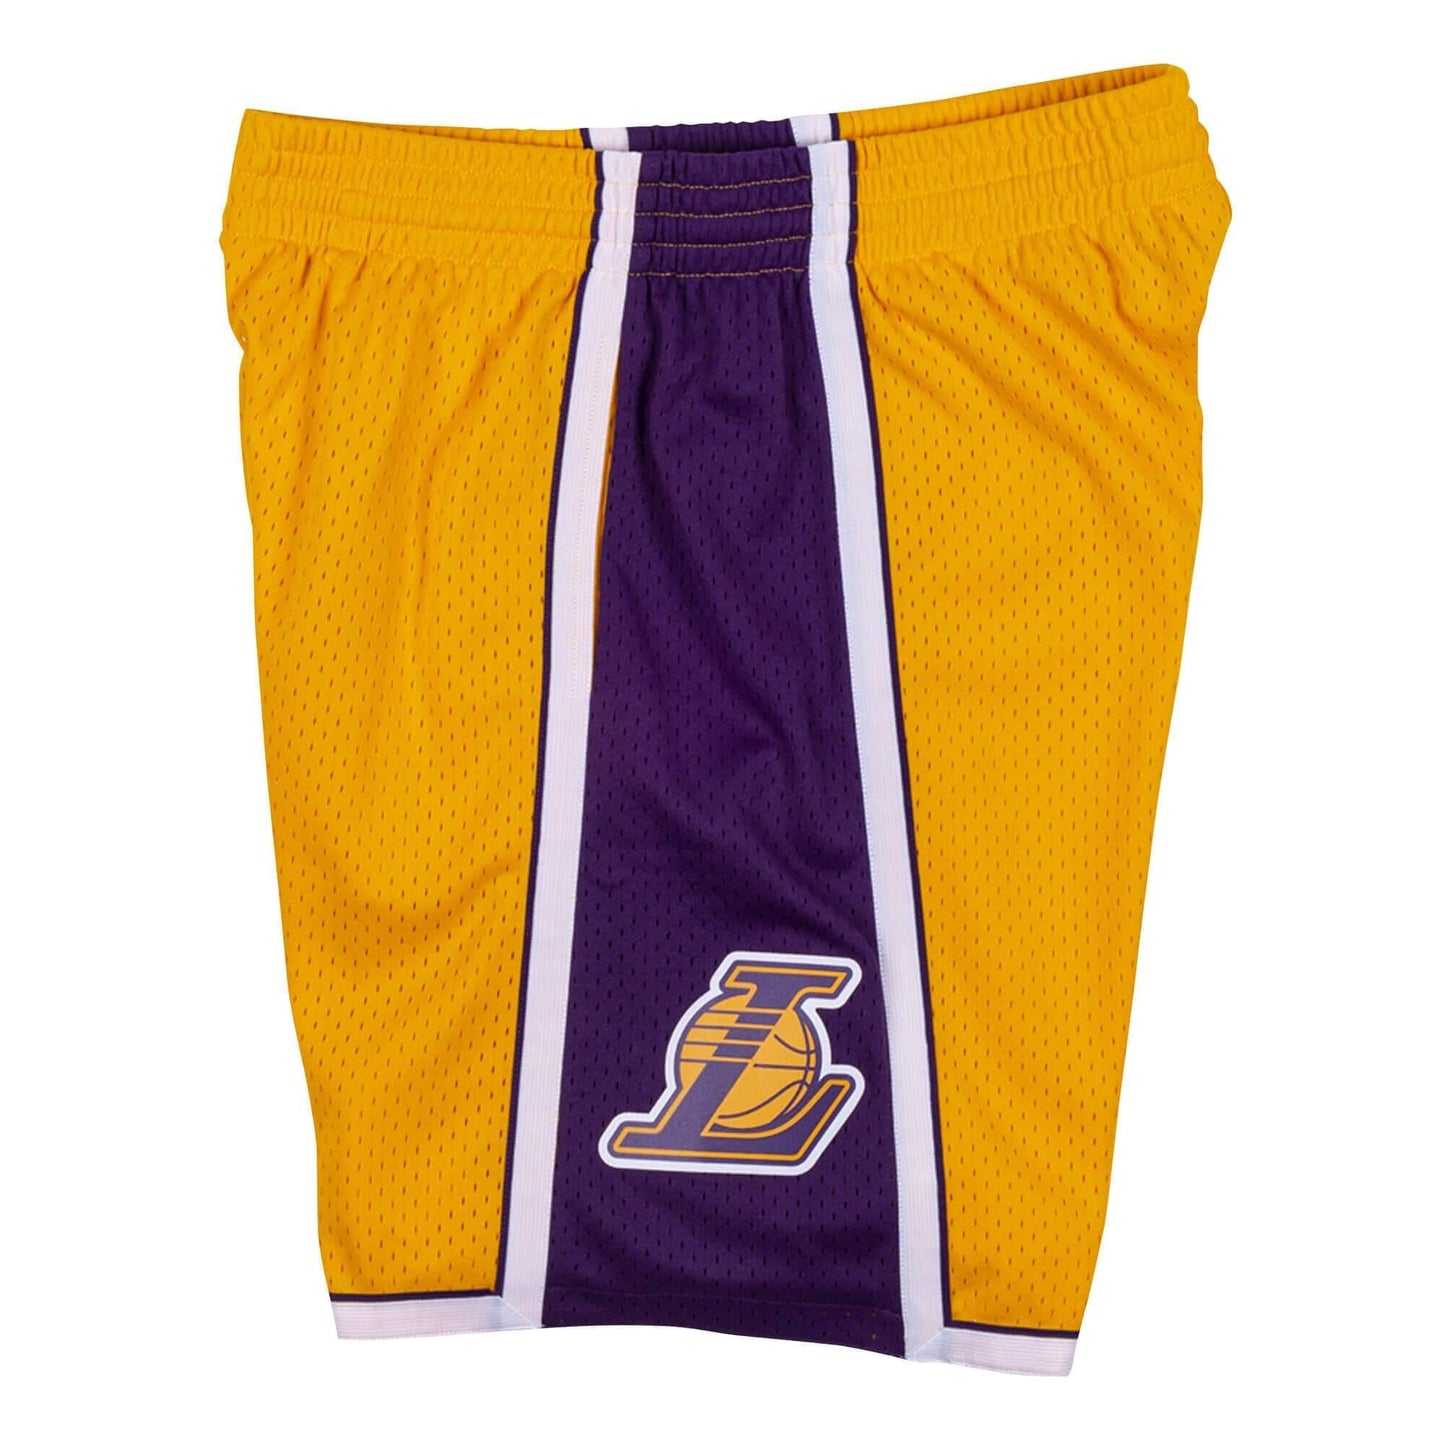 Mitchell & Ness Swingman Shorts Los Angeles Lakers 2009-10 Light Gold / Purple